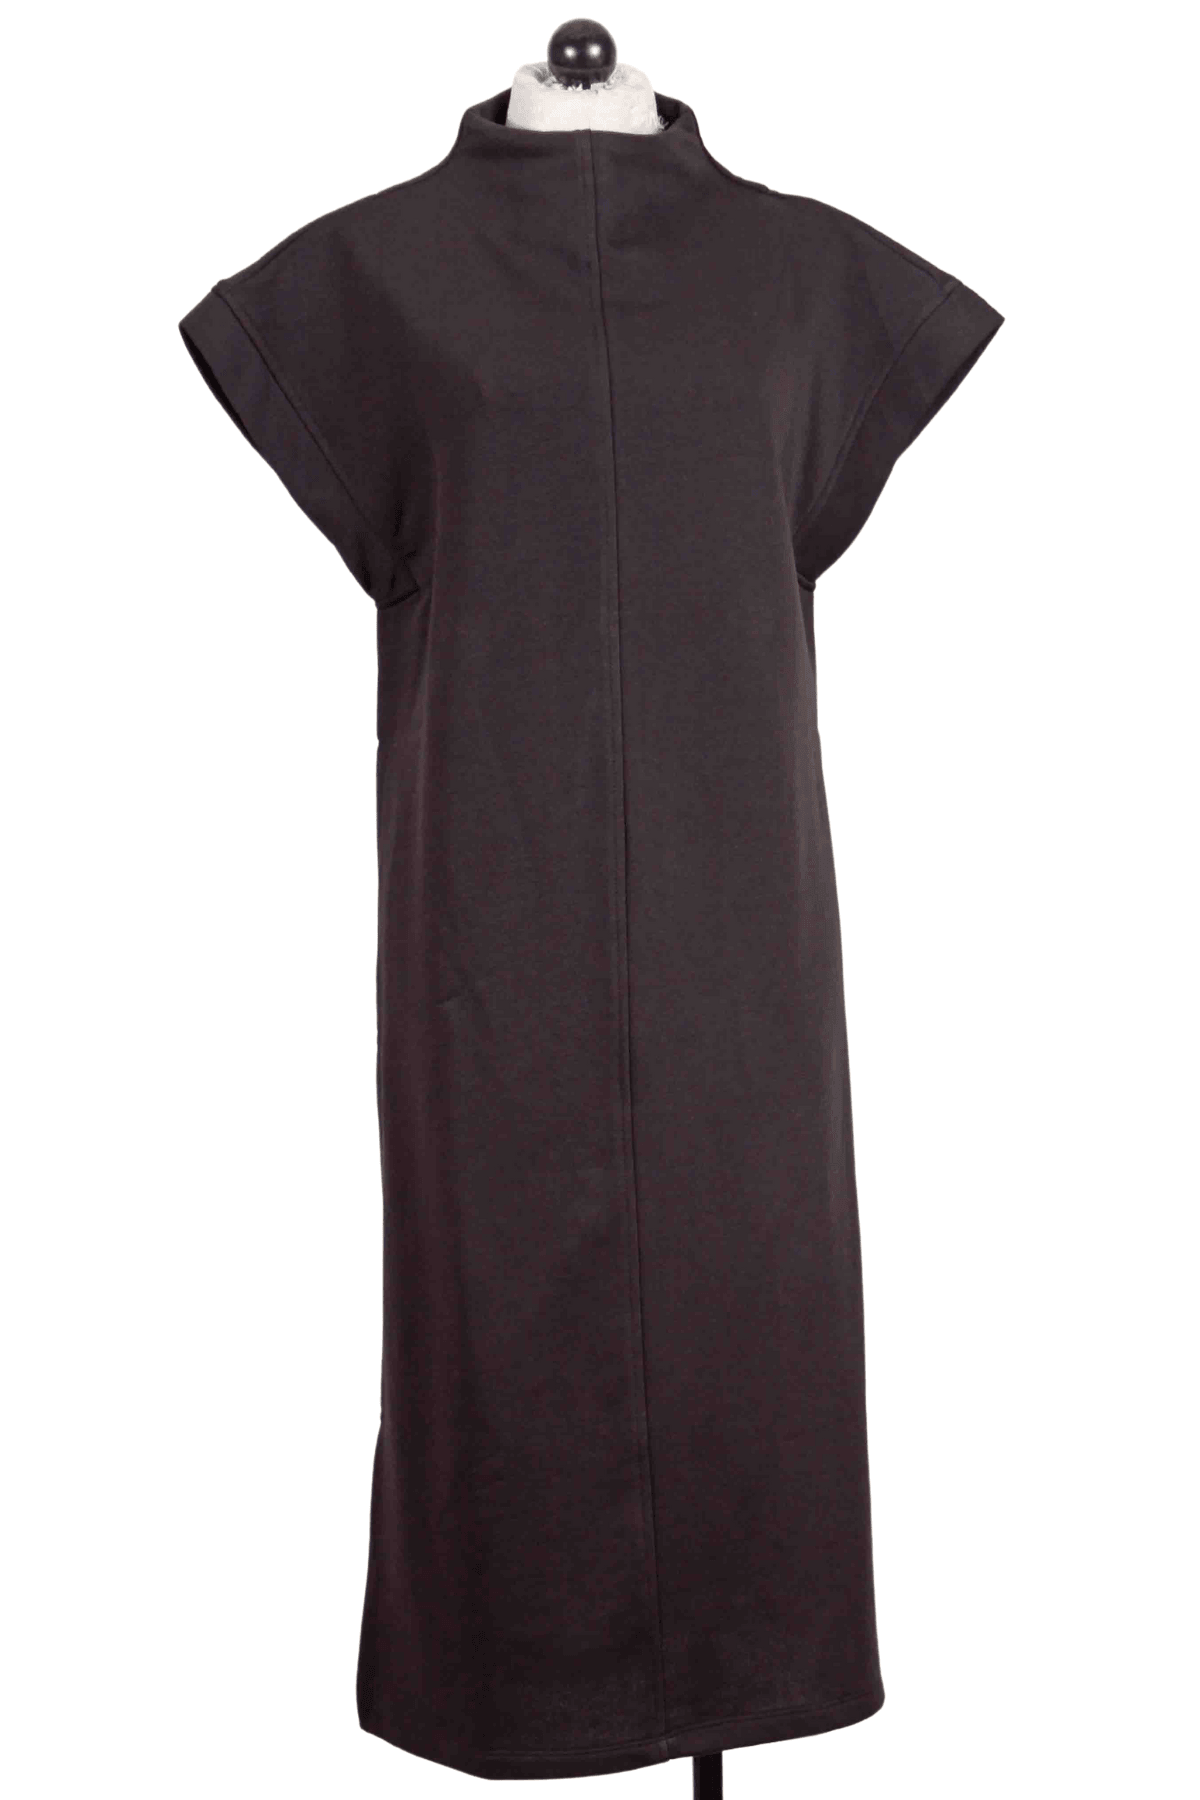 black Cap Sleeve Split Sided Dress by Alembika